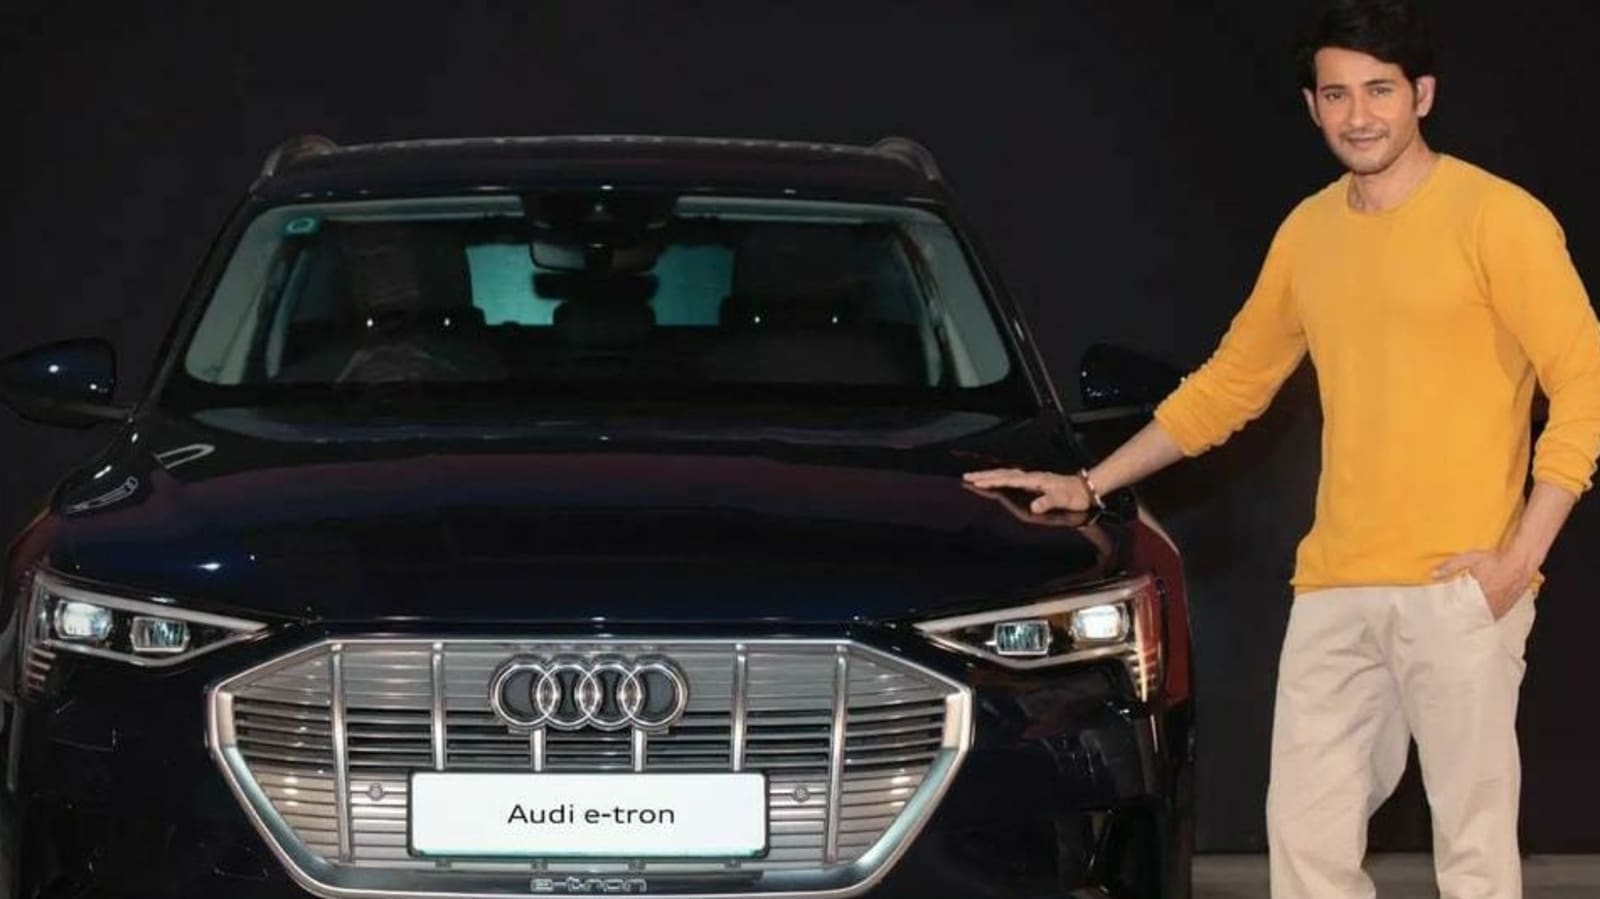 Mahesh Babu brings home Audi electric car worth ₹1.19 crore, bats for ‘clean green, sustainable future’